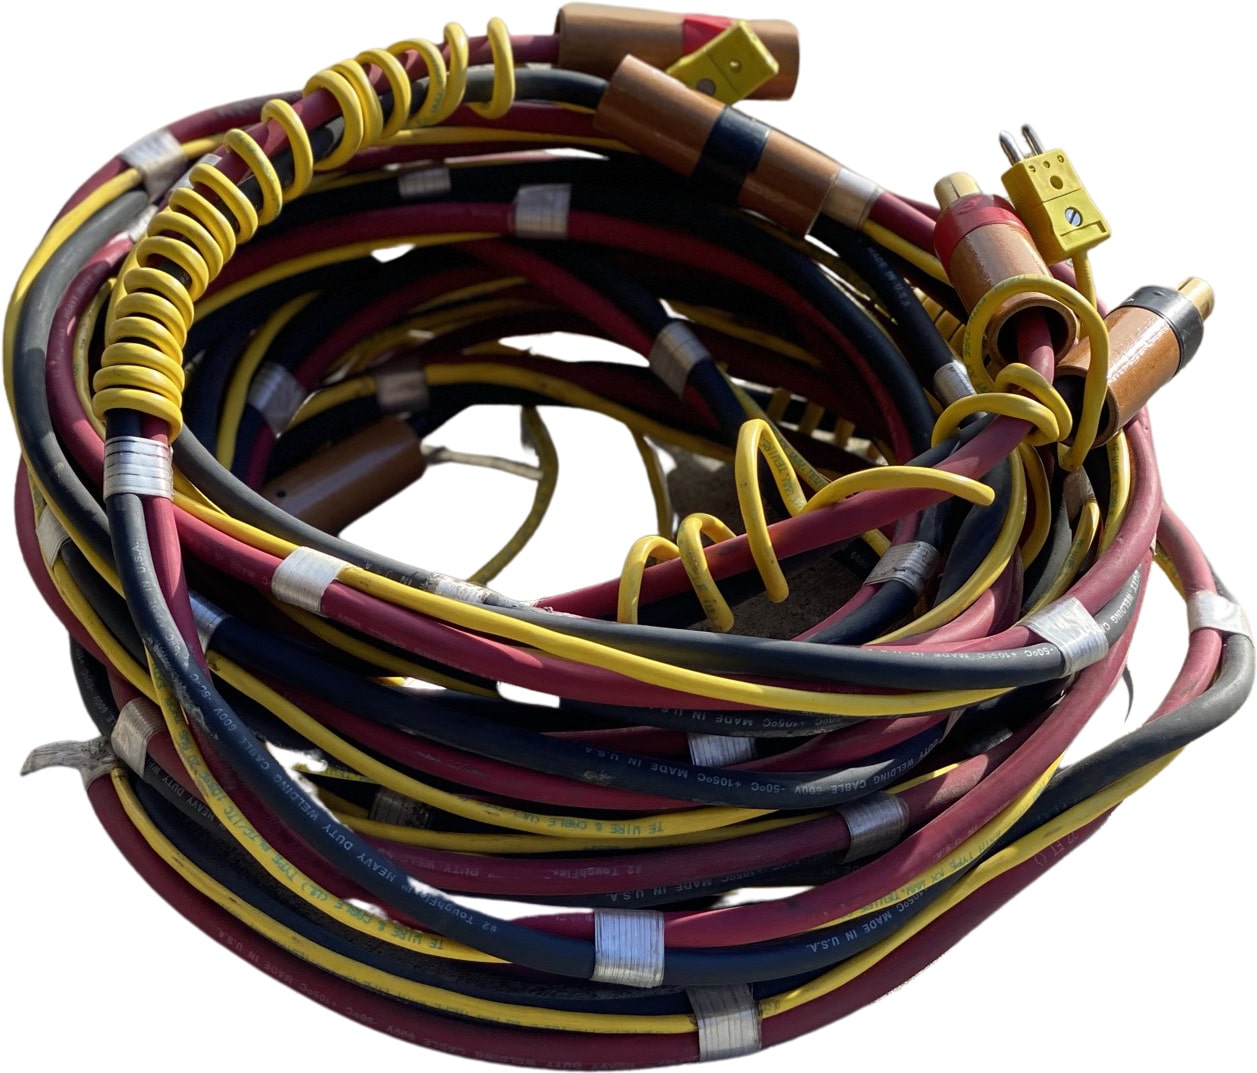 Heat Treatment Cables 50ft